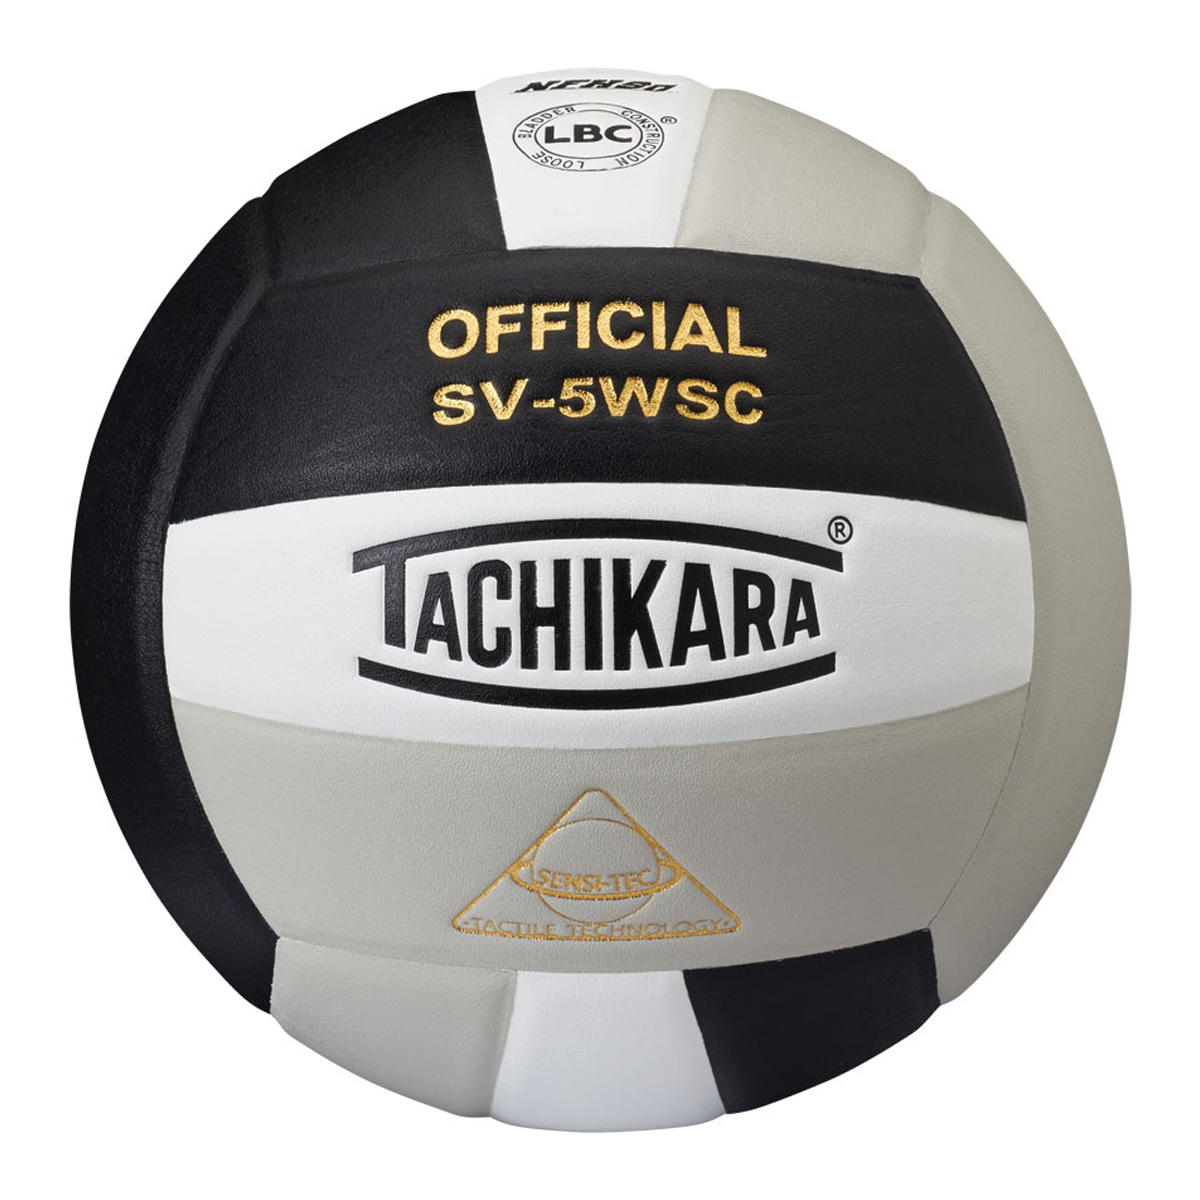 Tachikara SV5WSC Composite Volleyball-Black, White & Silver